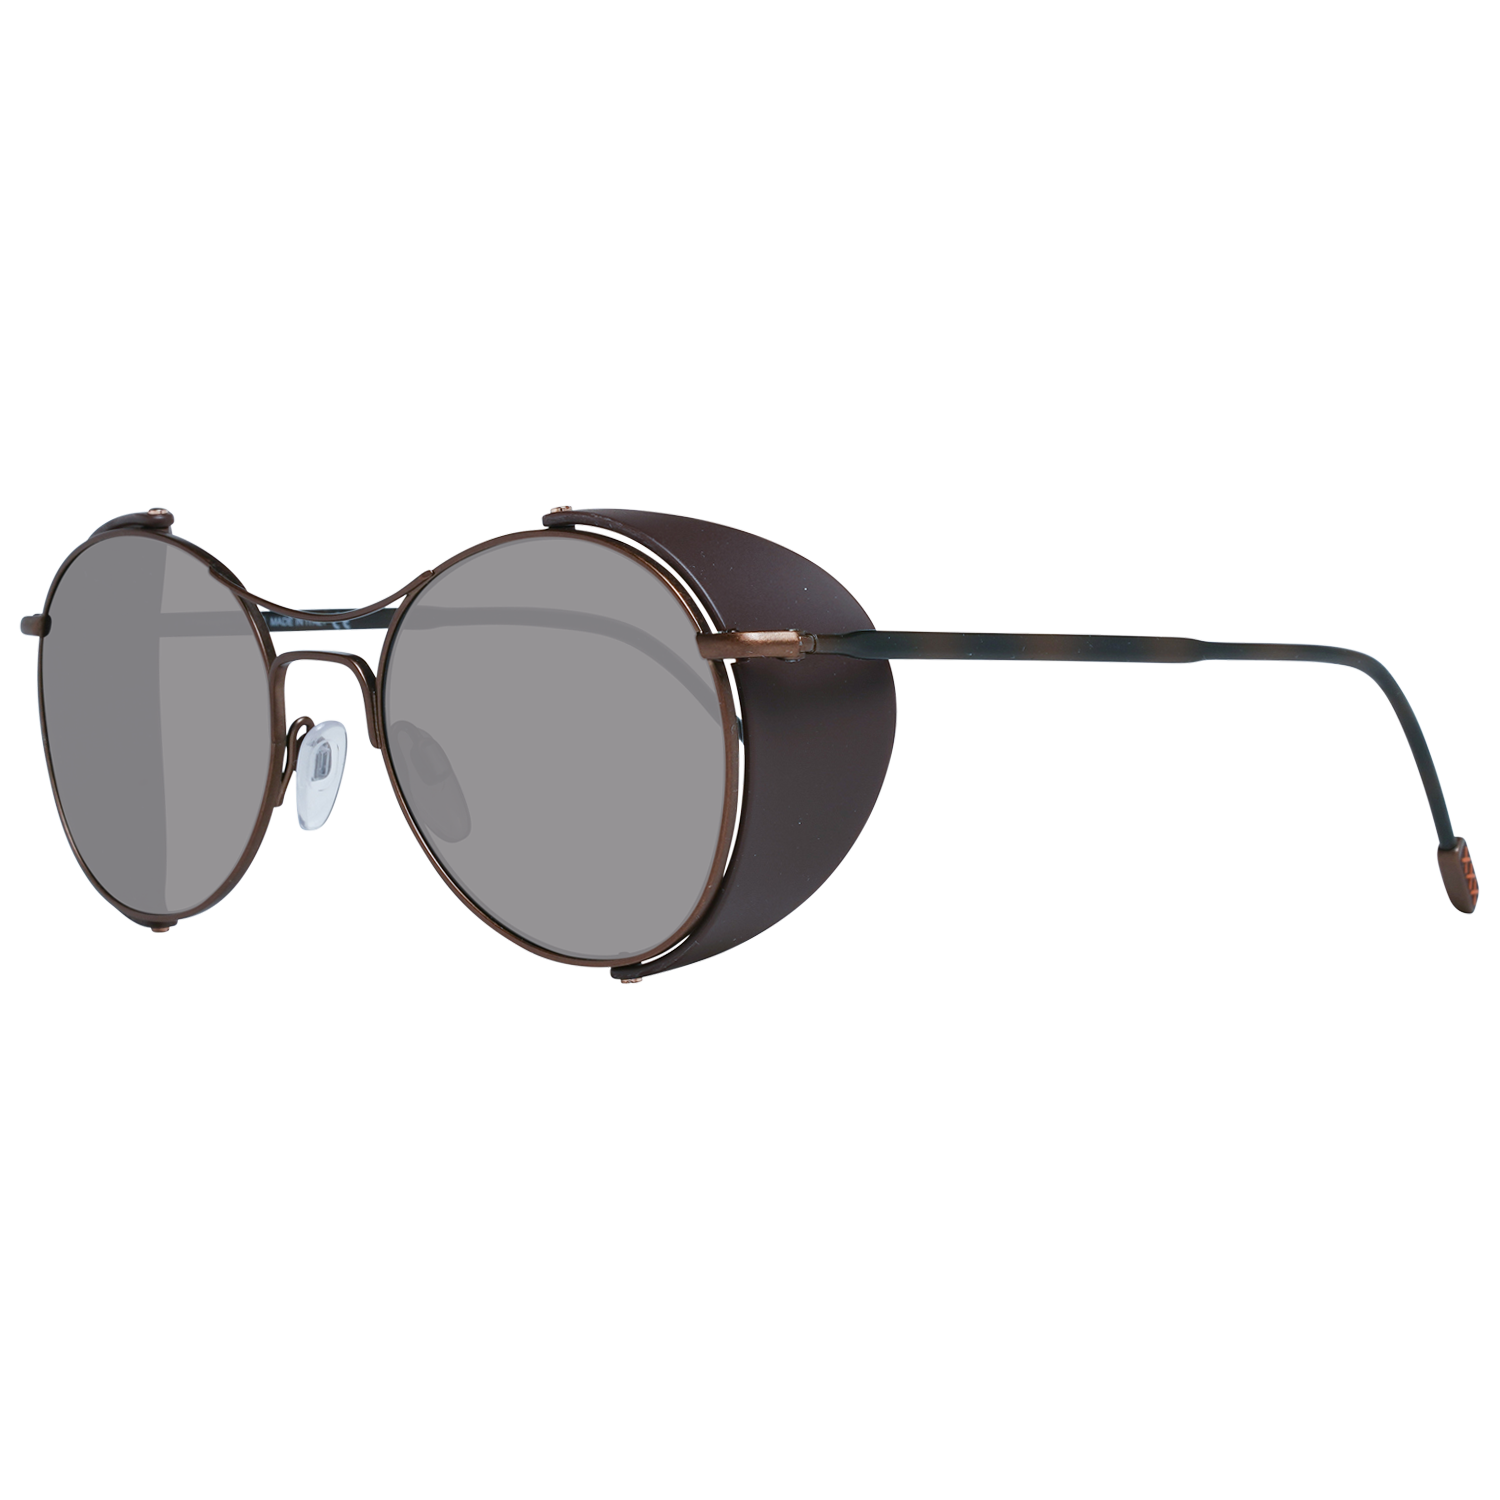 Zegna Couture Sunglasses Zegna Couture Sunglasses ZC0022 52 37J Titanium Eyeglasses Eyewear UK USA Australia 